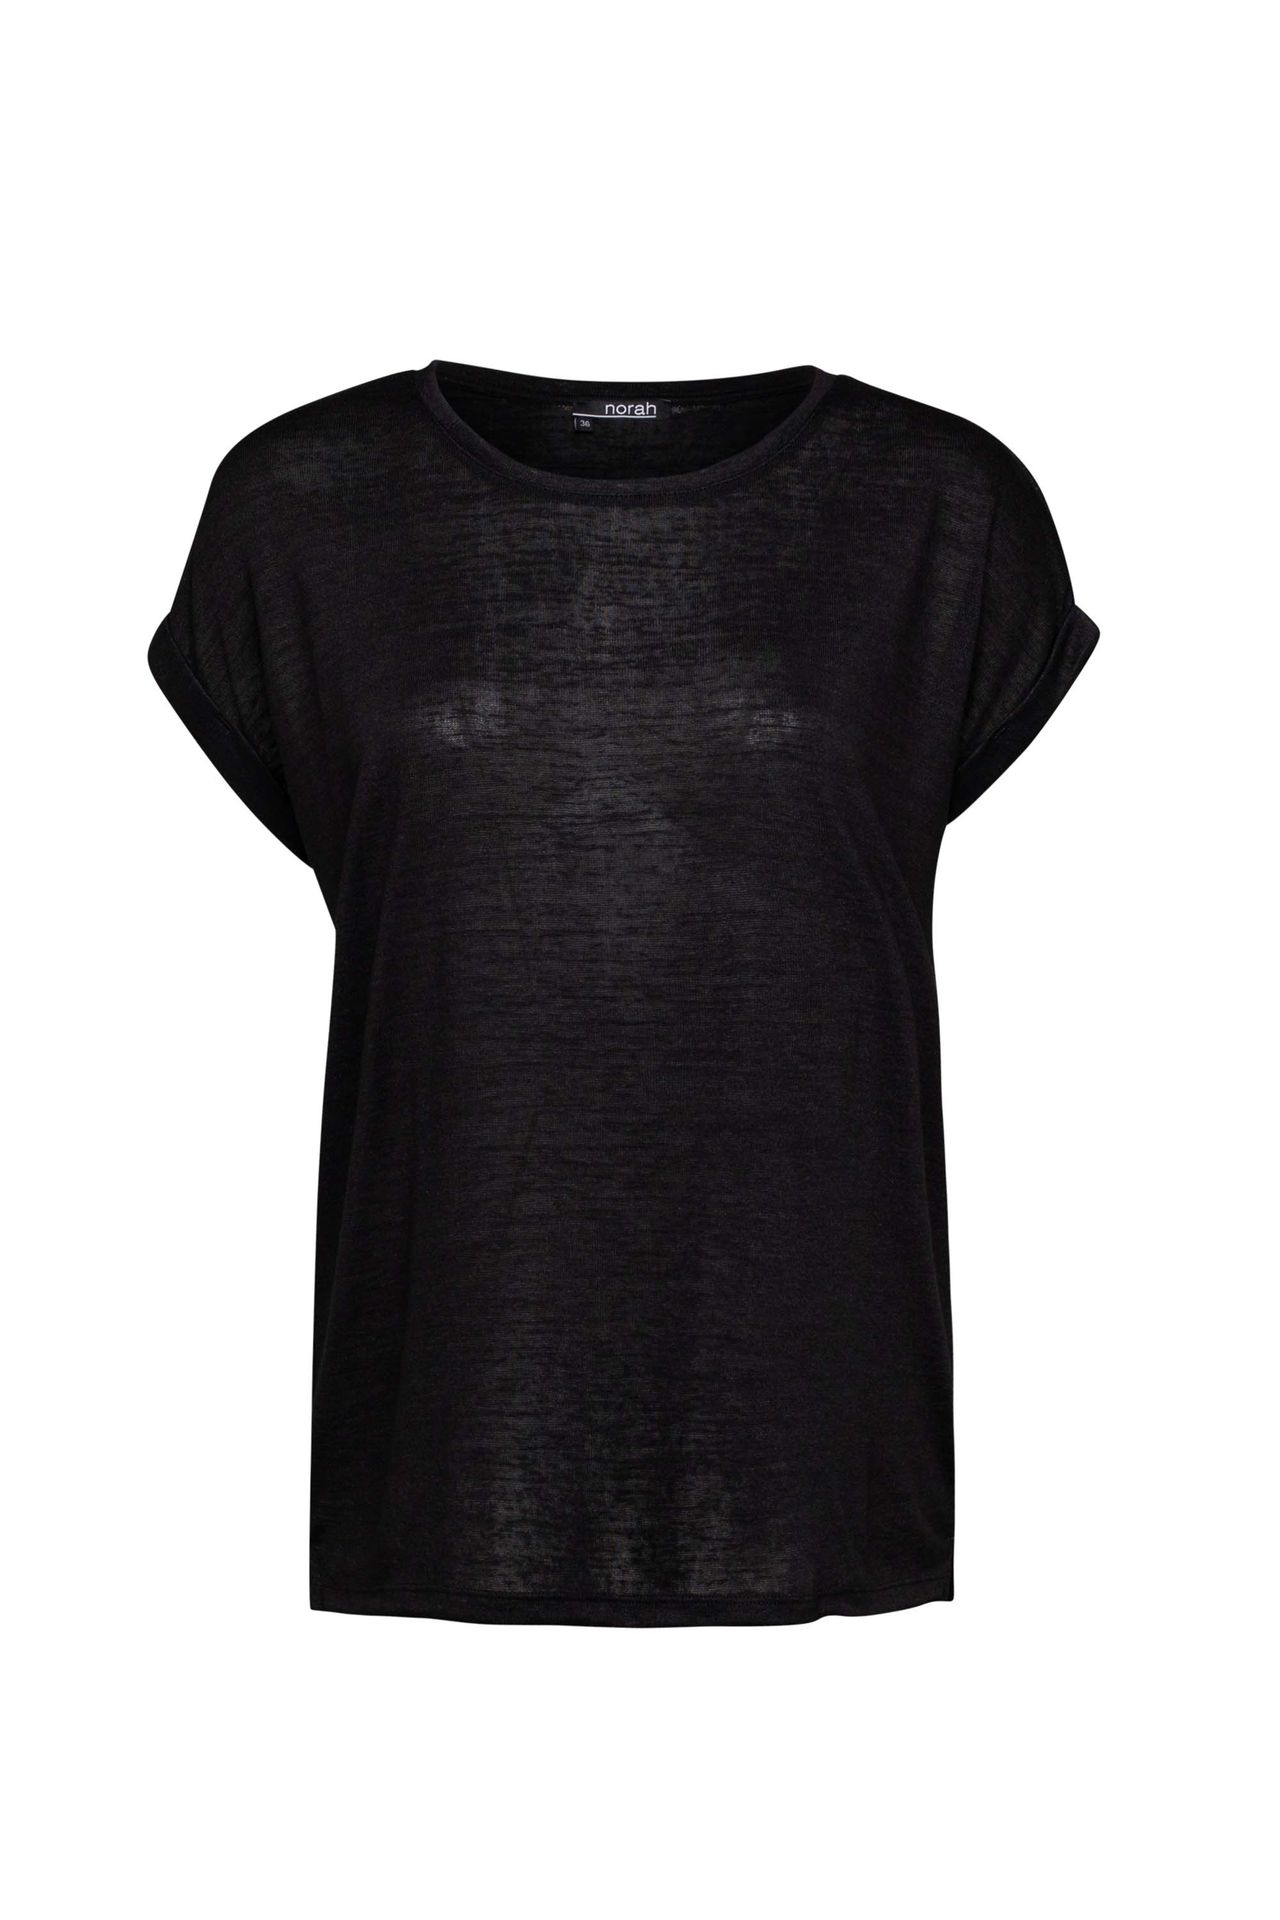 Norah Shirt zwart black 211185-001